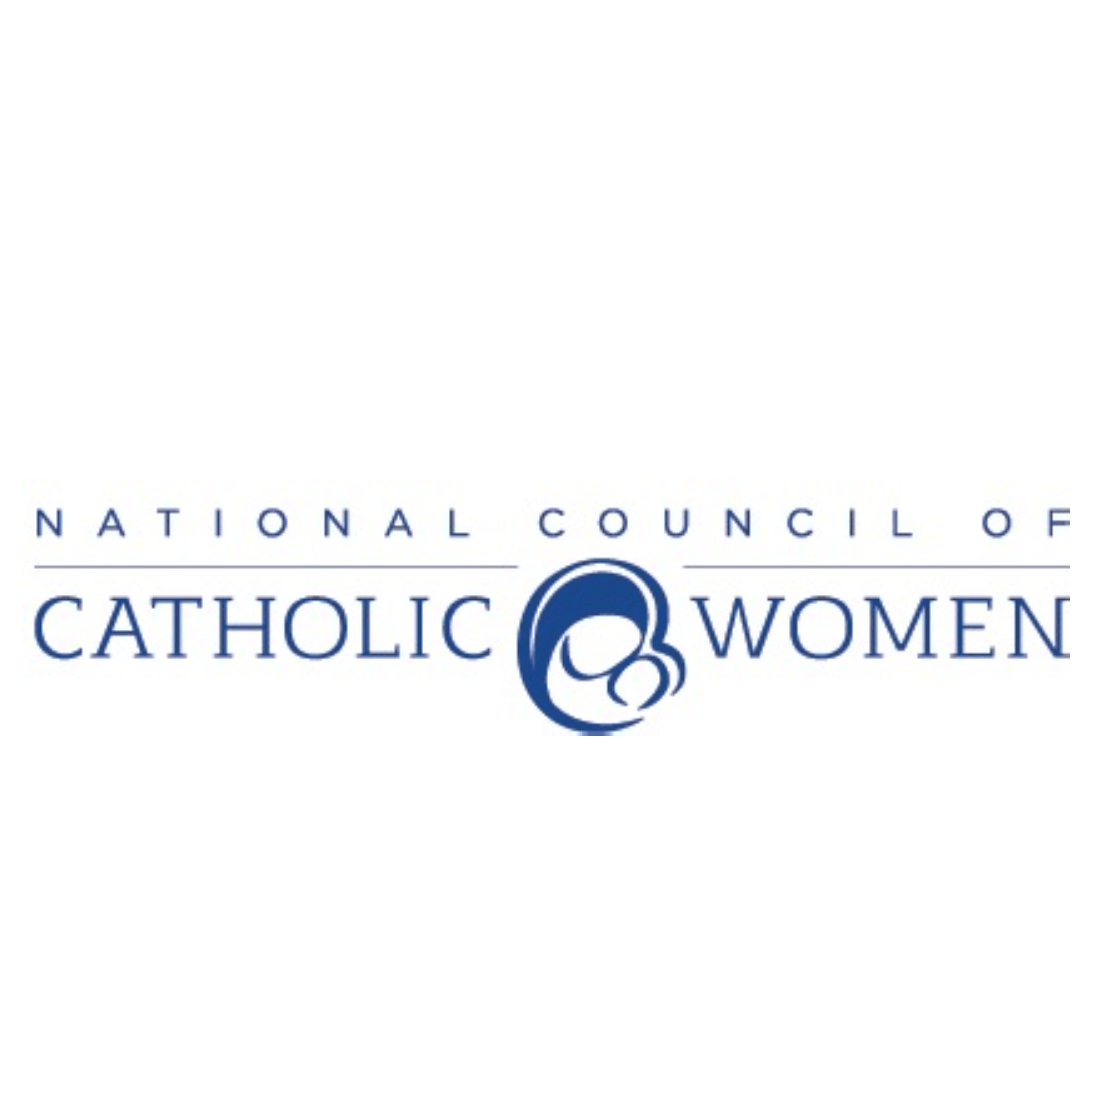 Female Religious Organization in USA - National Council of Catholic Women